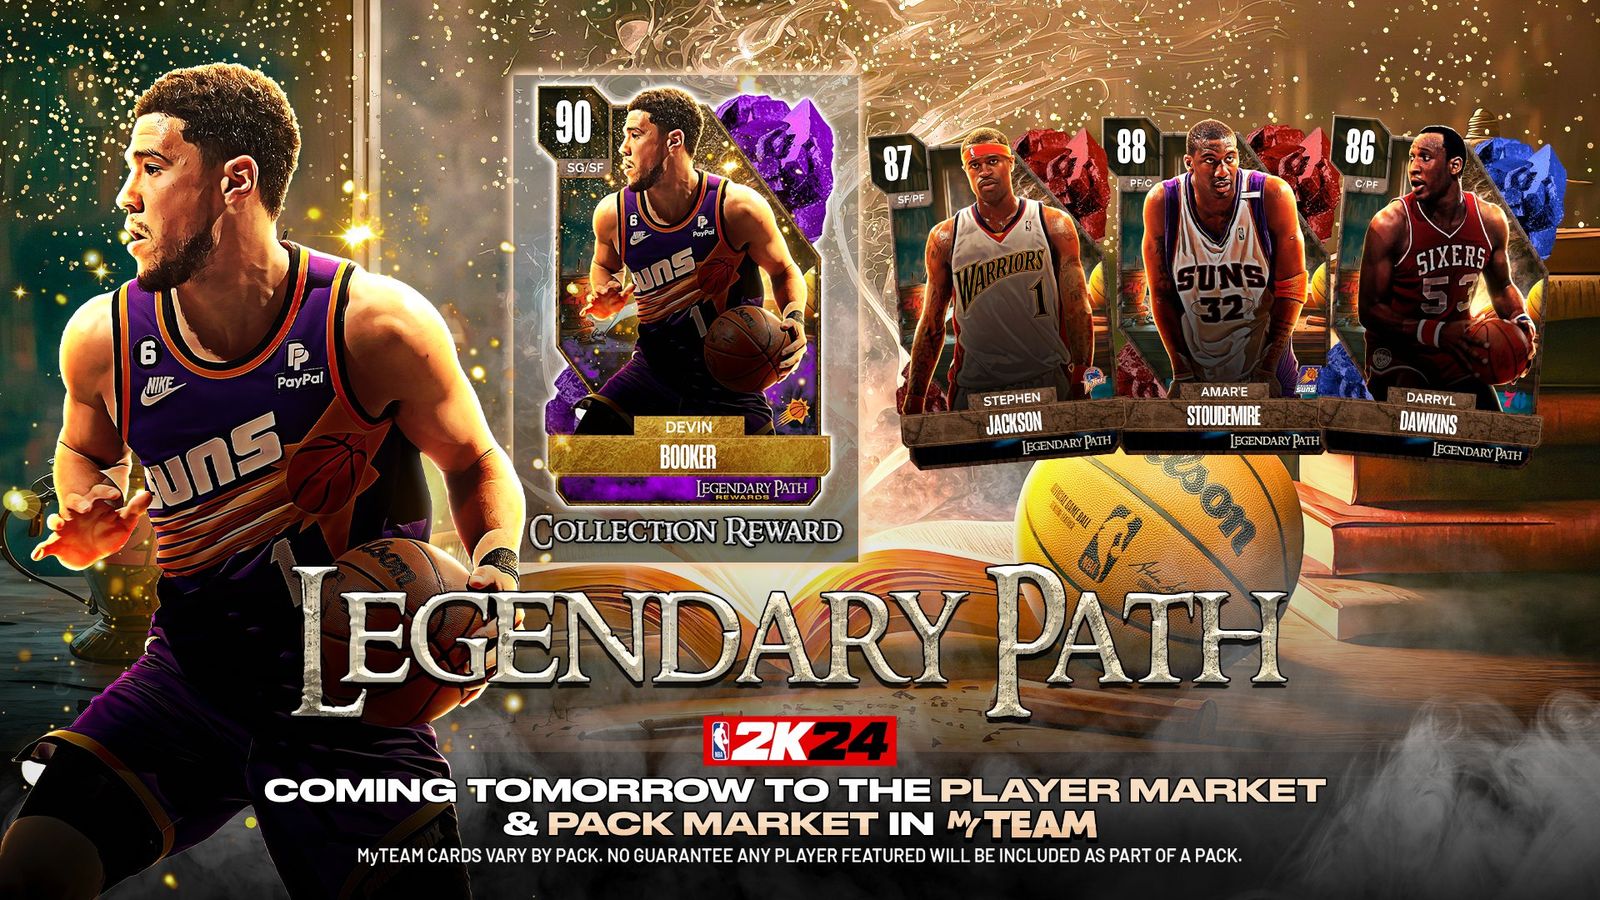 NBA 2K24 Legendary Path event